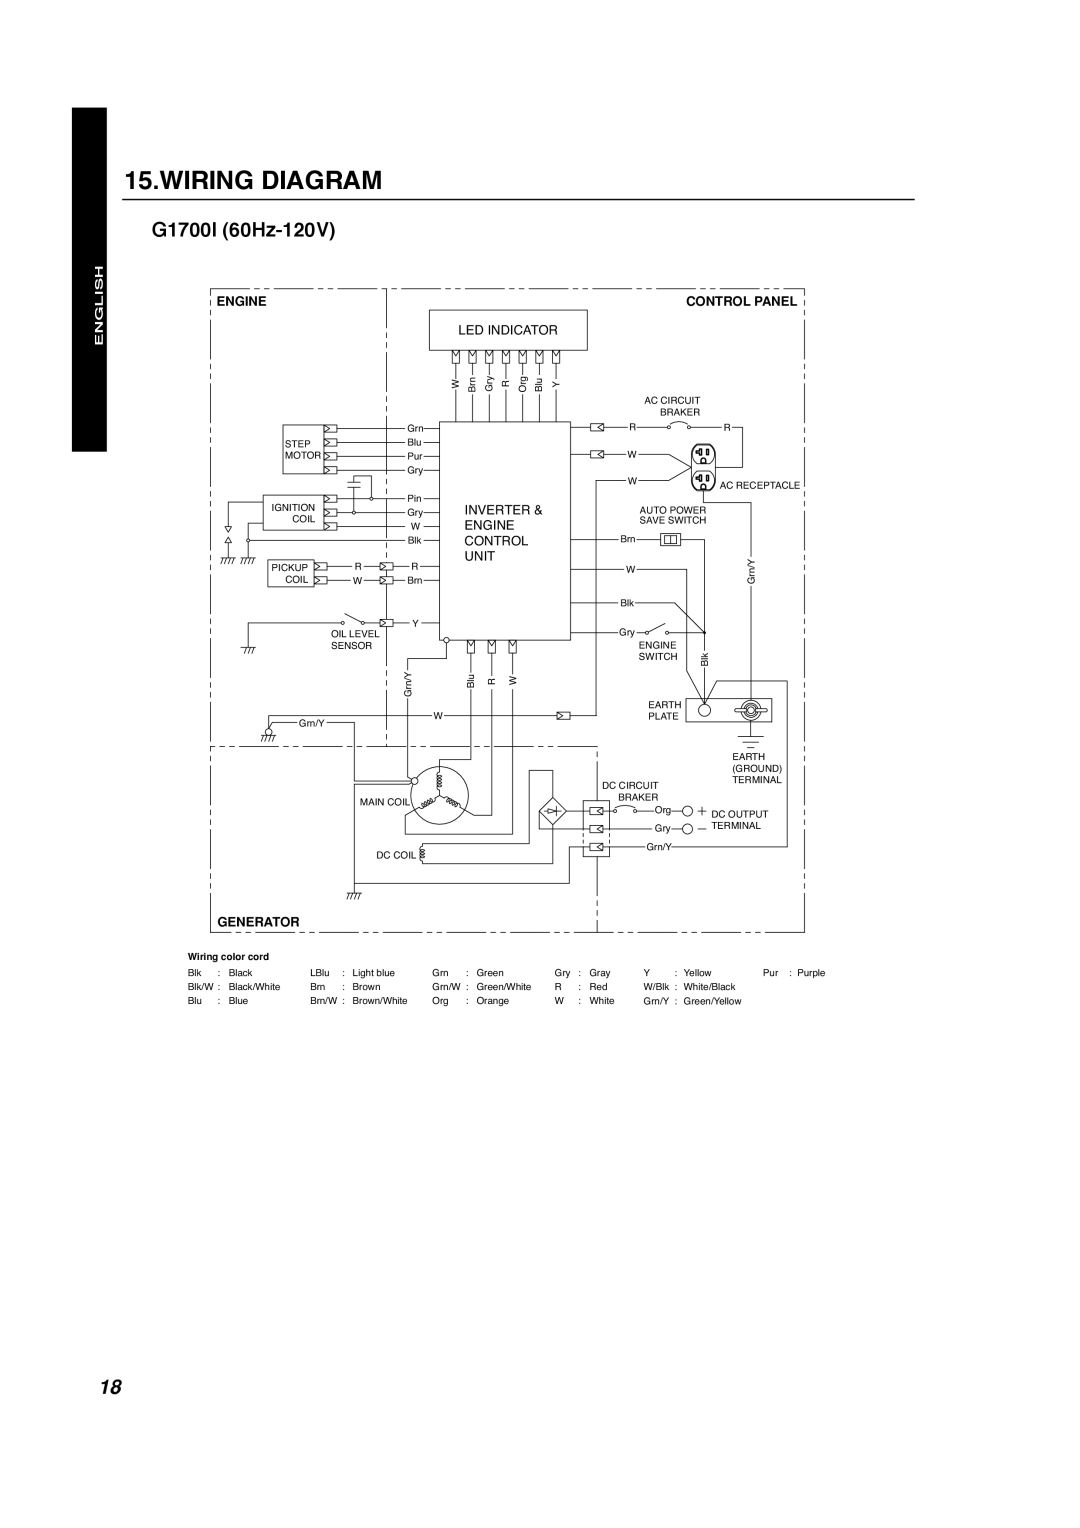 Makita G1700i manual Wiring Diagram, G1700I 60Hz-120V, English, Française, Español, Engine, Led Indicator, Generator 